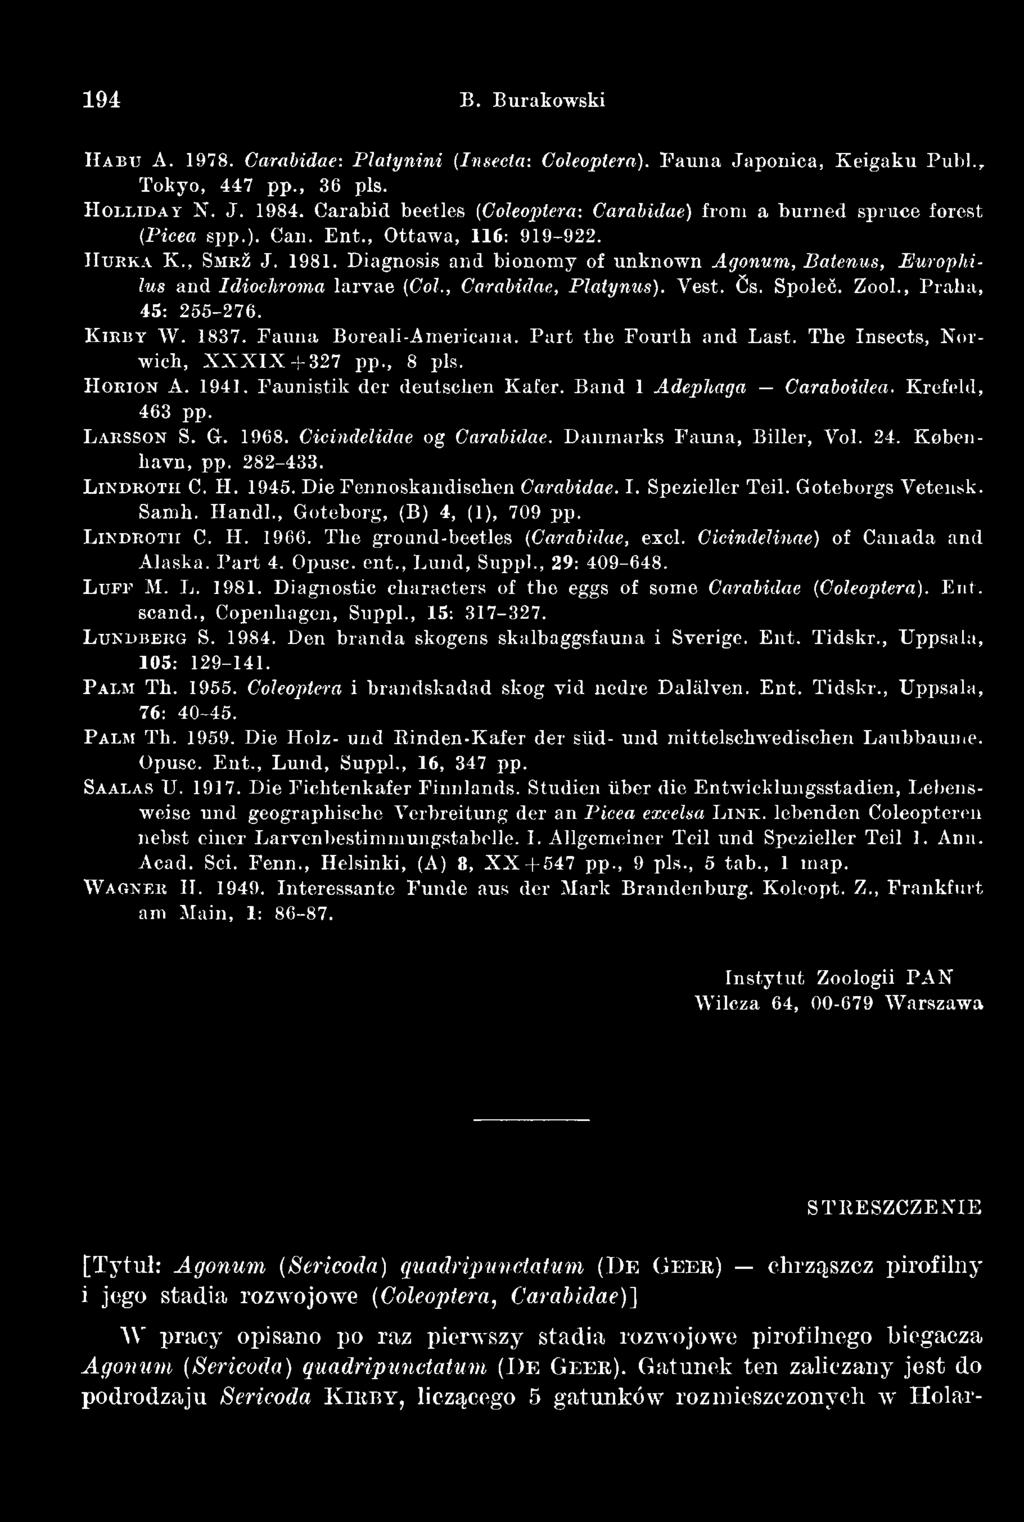 Cicindelidae og Carabidae. Danmarks Fauna, Biller, Vol. 24. Kobenliavn, pp. 282-433. L in d r o t h C. II. 1945. Die Fennoskandischen Carabidae. I. Spezieller Teil. Goteborgs Vetensk. Samh. Handl.